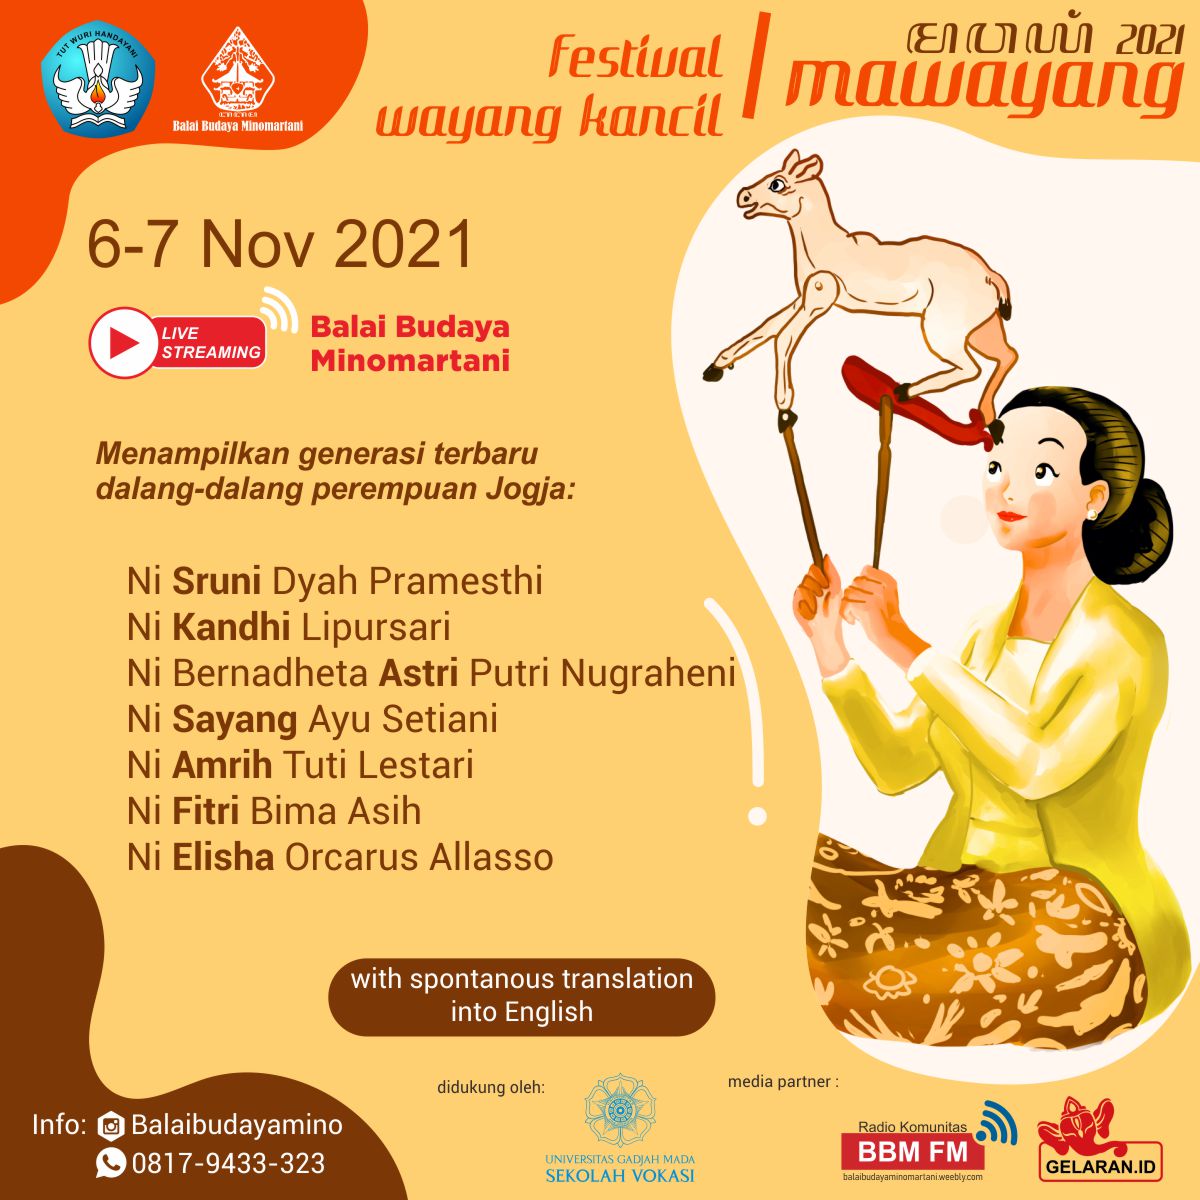 Festival Wayang Kancil | Mawayang 2021